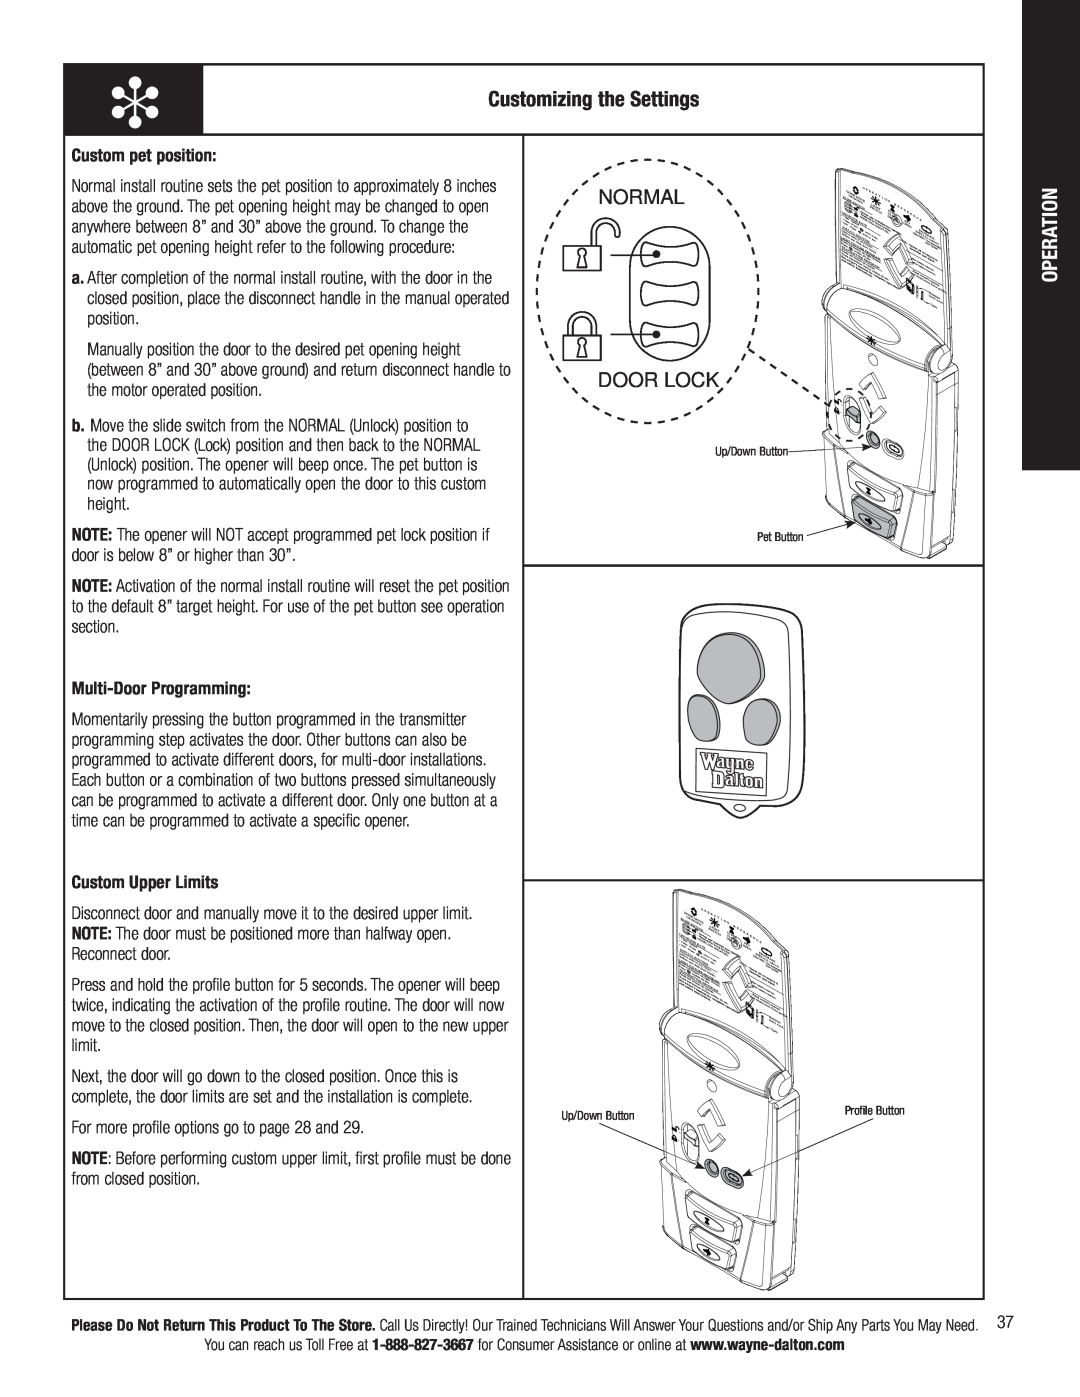 Wayne-Dalton 3790-Z installation instructions Operation, Normal, Door Lock, Customizing the Settings 